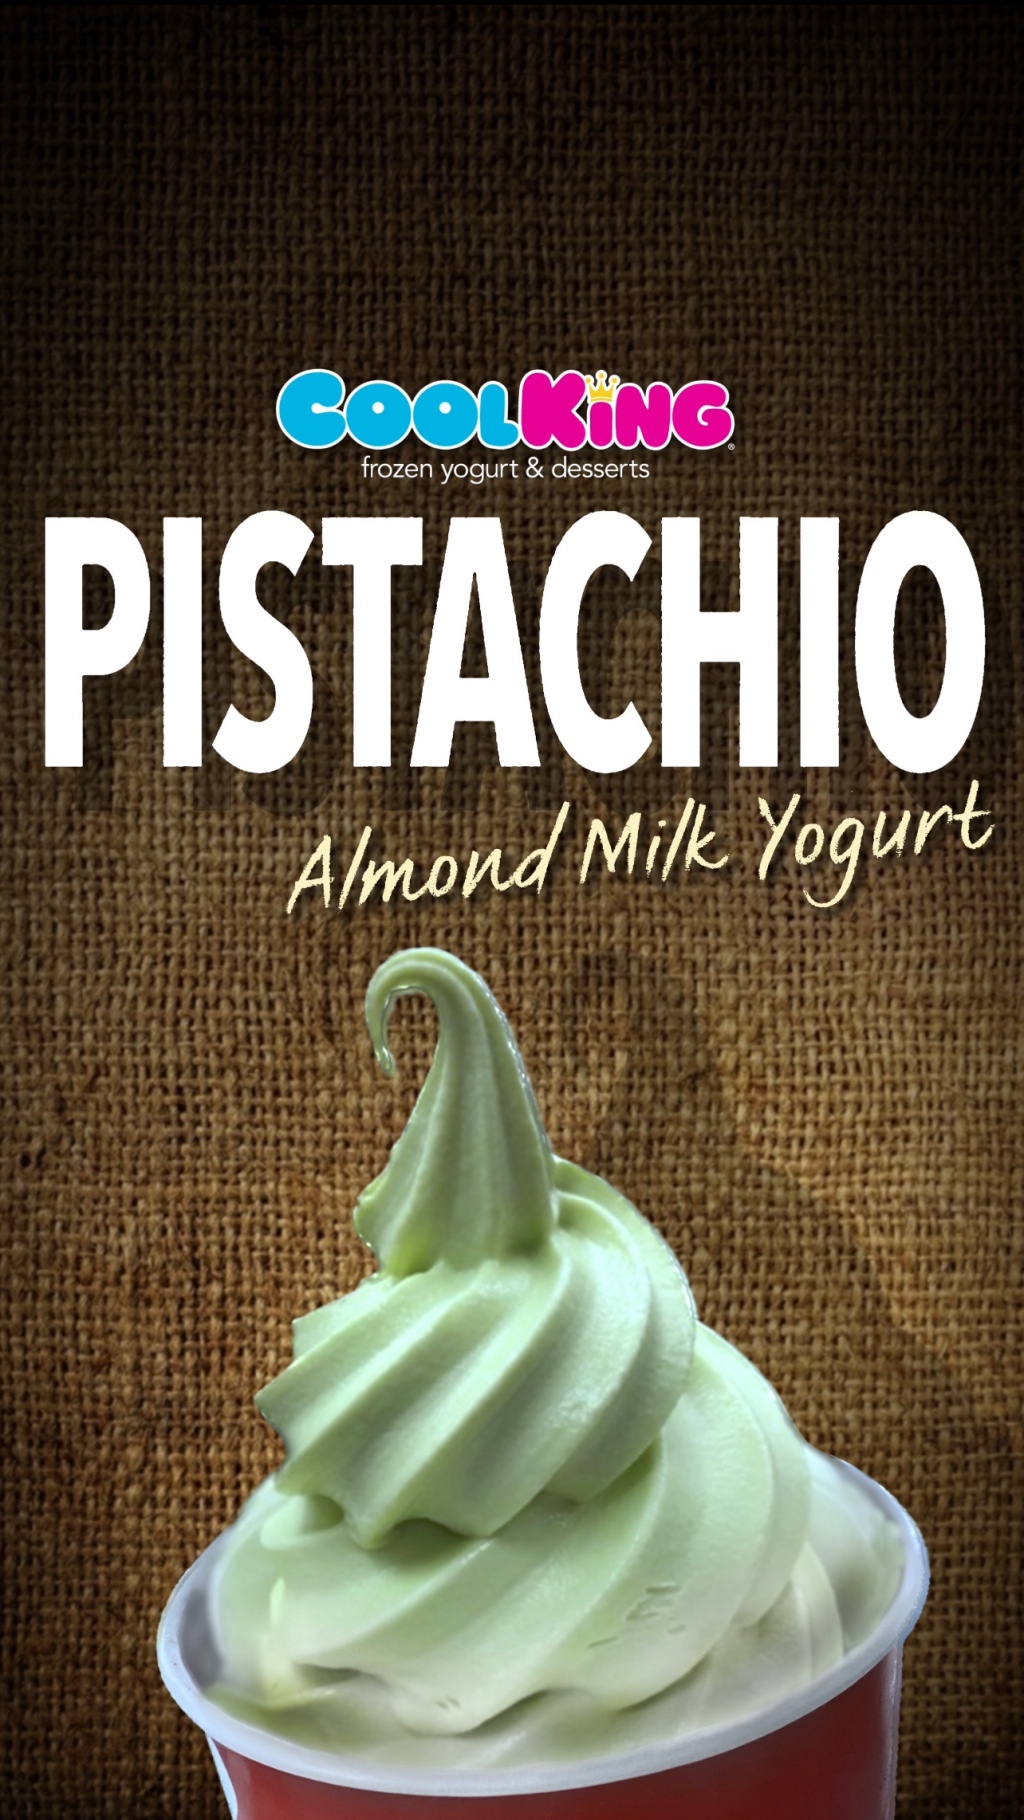 Cool King® “Pistachio” Almond Milk Yogurt